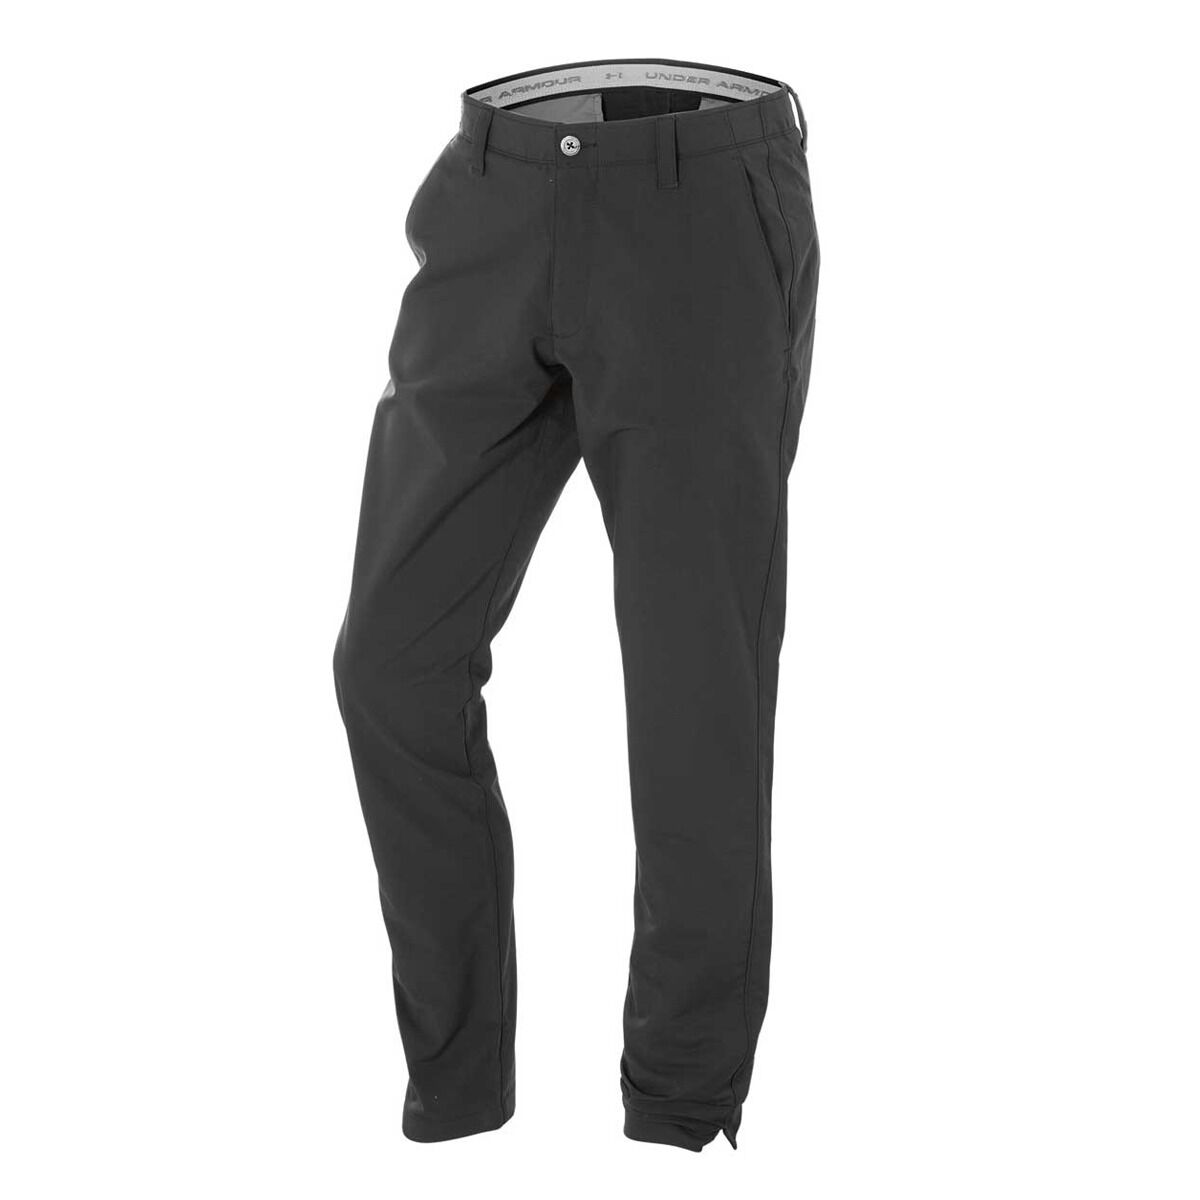 grey under armour golf pants